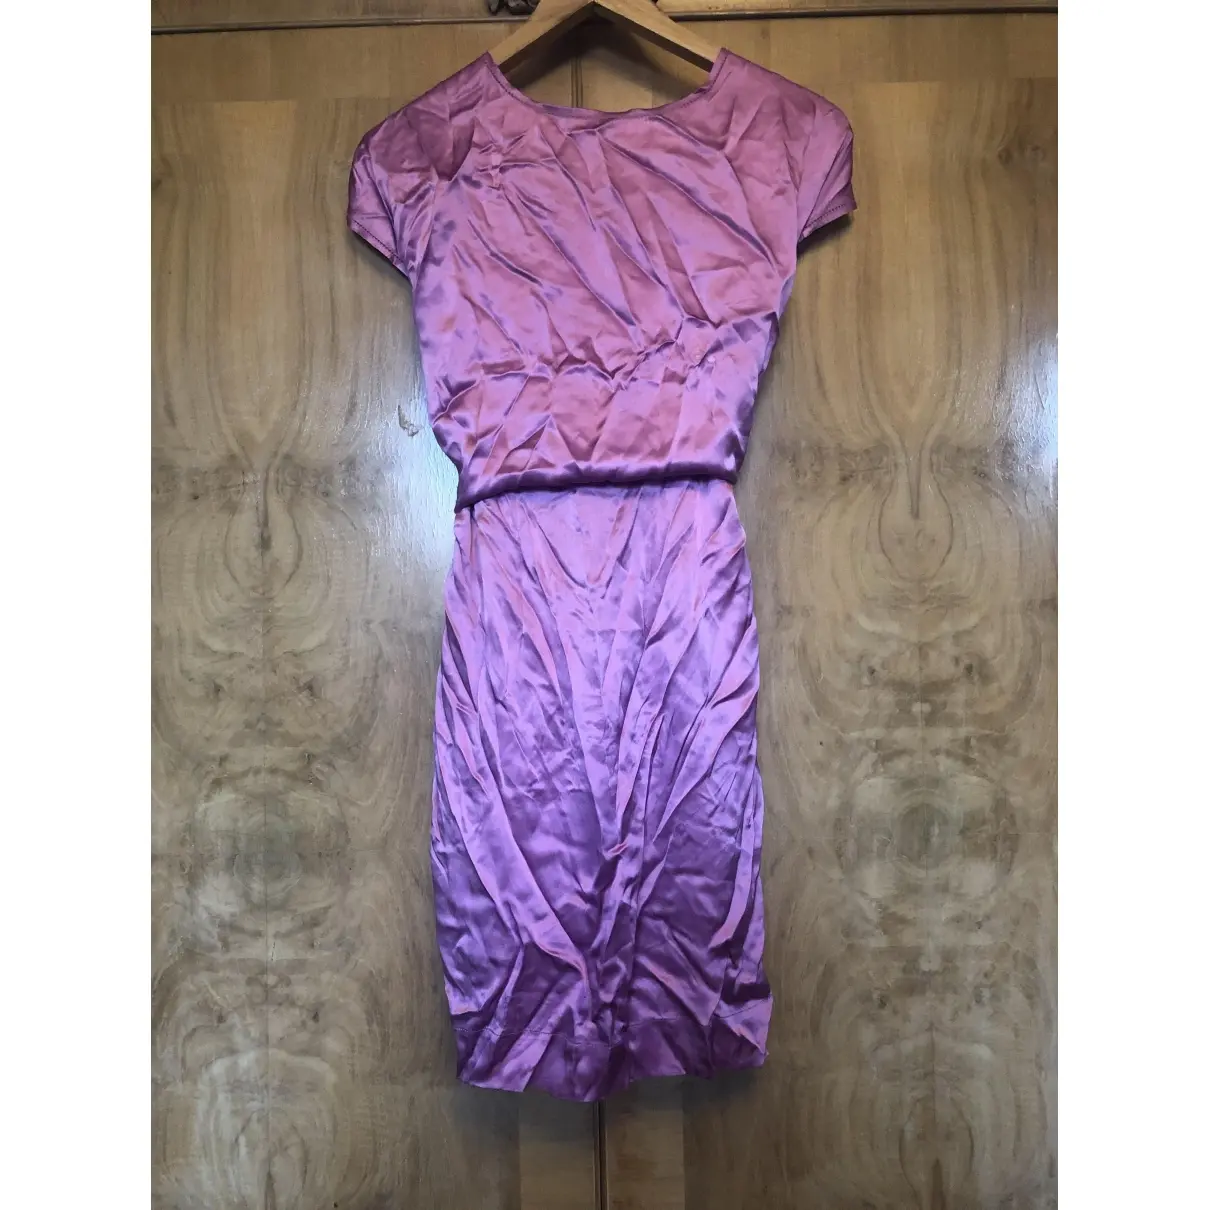 Buy See by Chloé Silk mini dress online